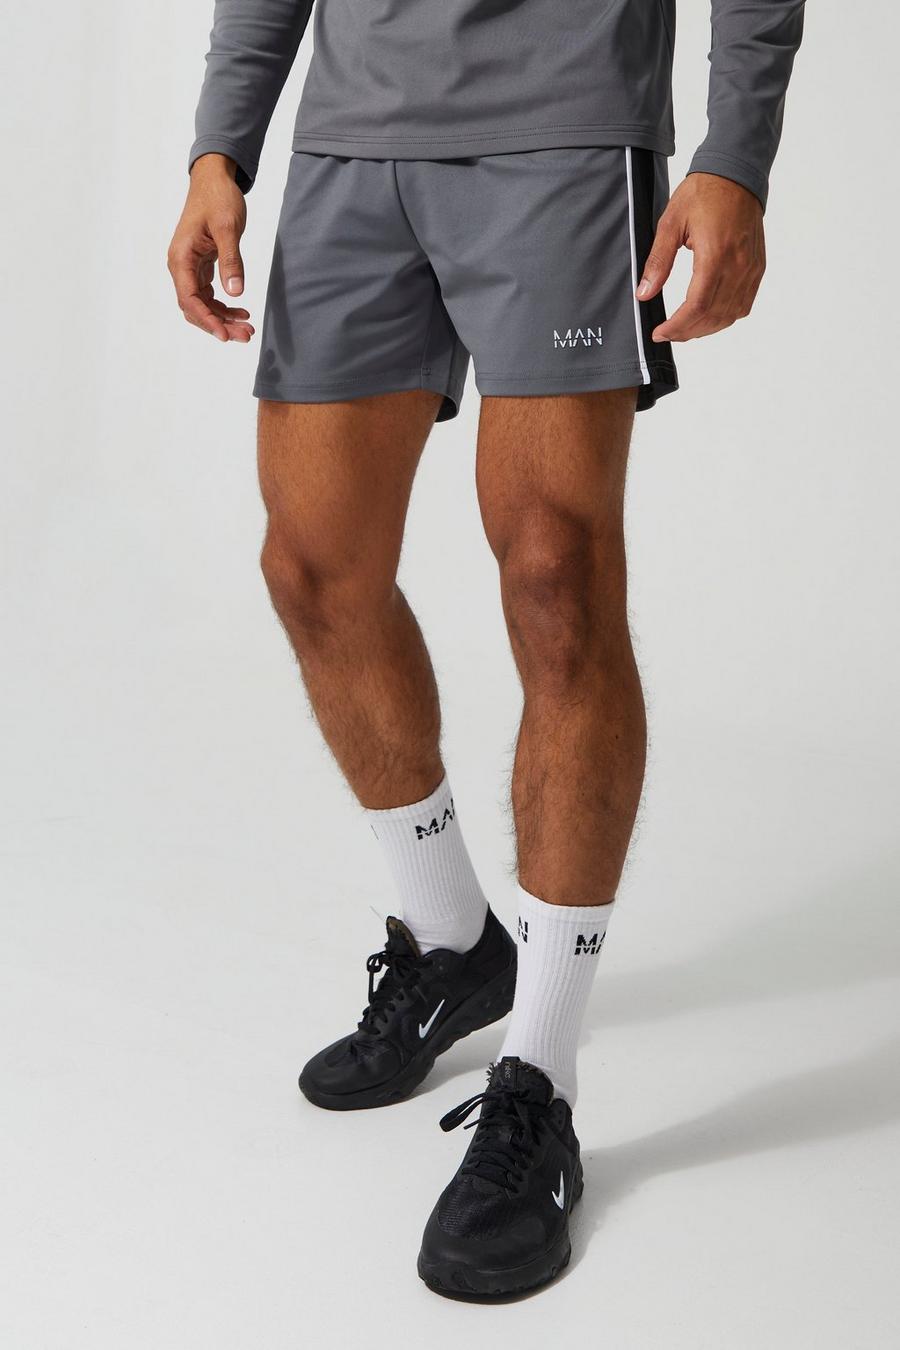 Pantaloncini da calcio Man Active per alta performance, Charcoal grigio